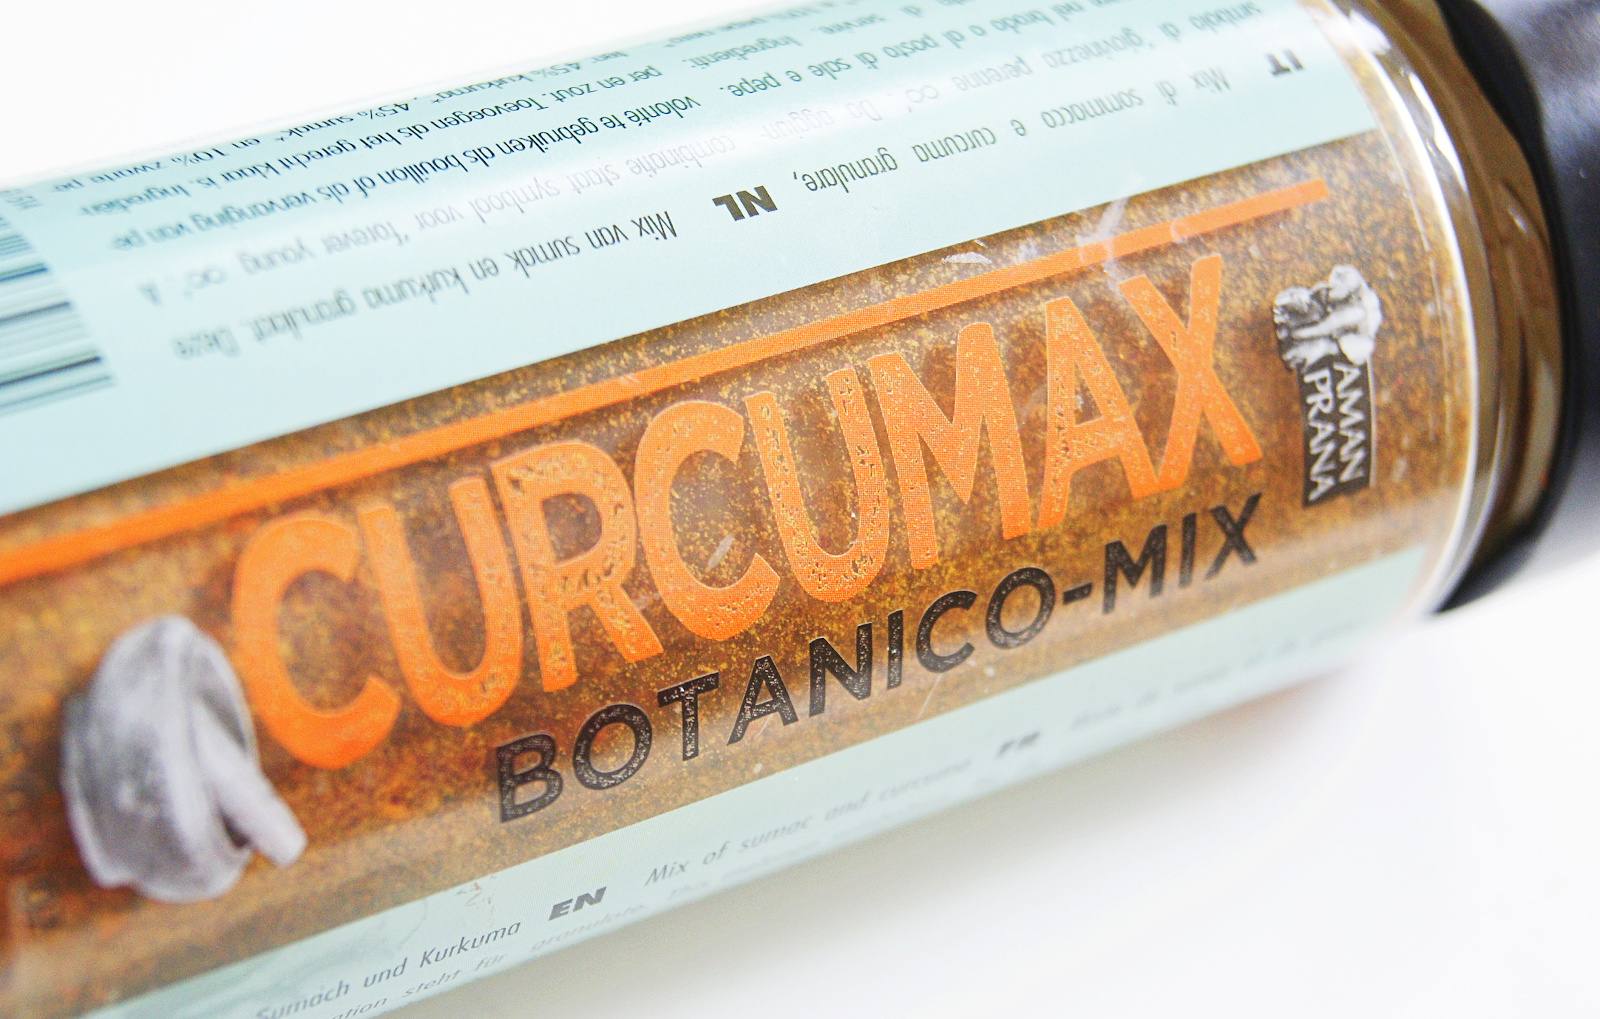 Bio Curcumax Botanico-mix van AmanPrana